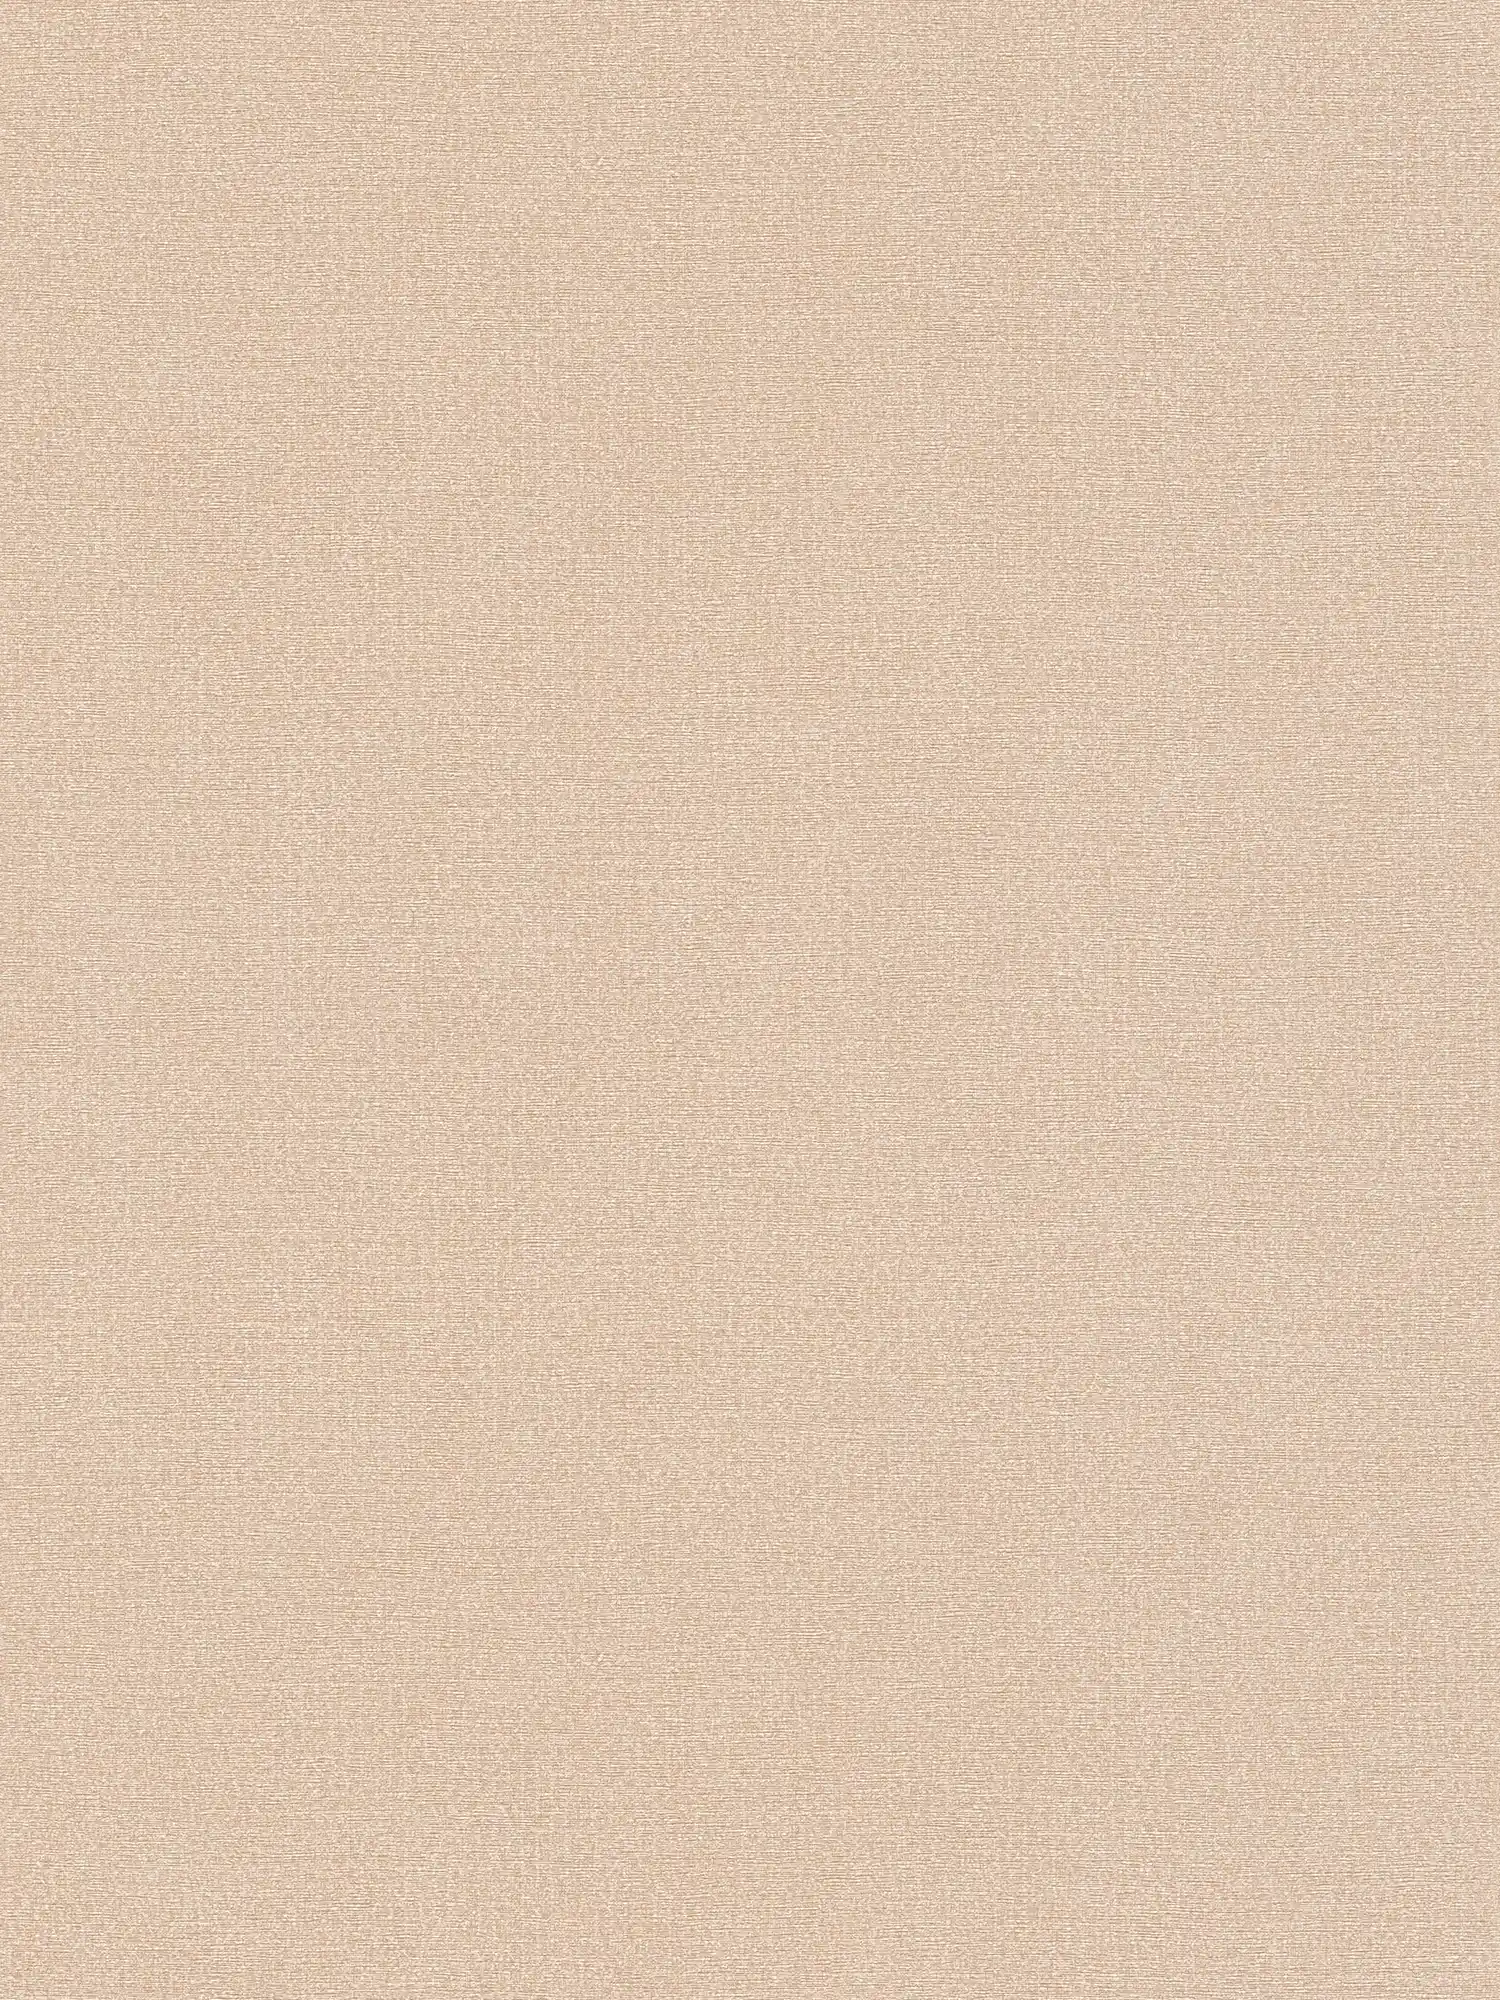 PVC-free non-woven wallpaper with glossy polka dot pattern - beige
